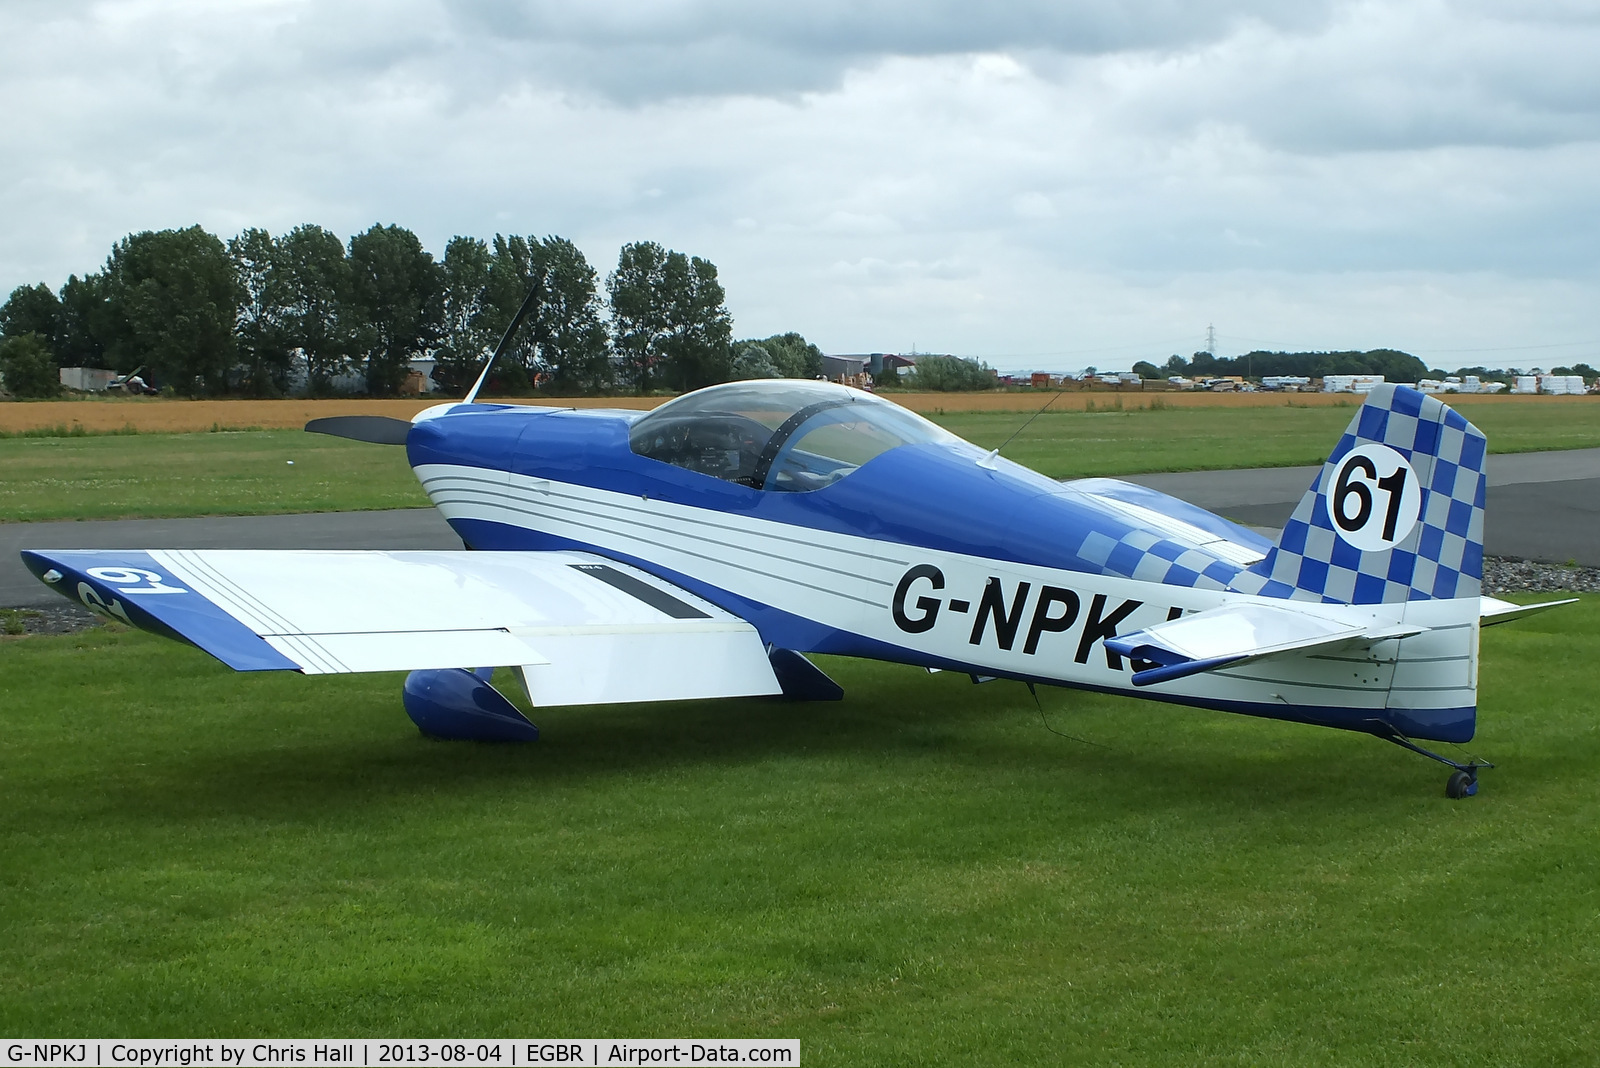 G-NPKJ, 1998 Vans RV-6 C/N PFA 181-13138, at Breighton's Summer Fly-in